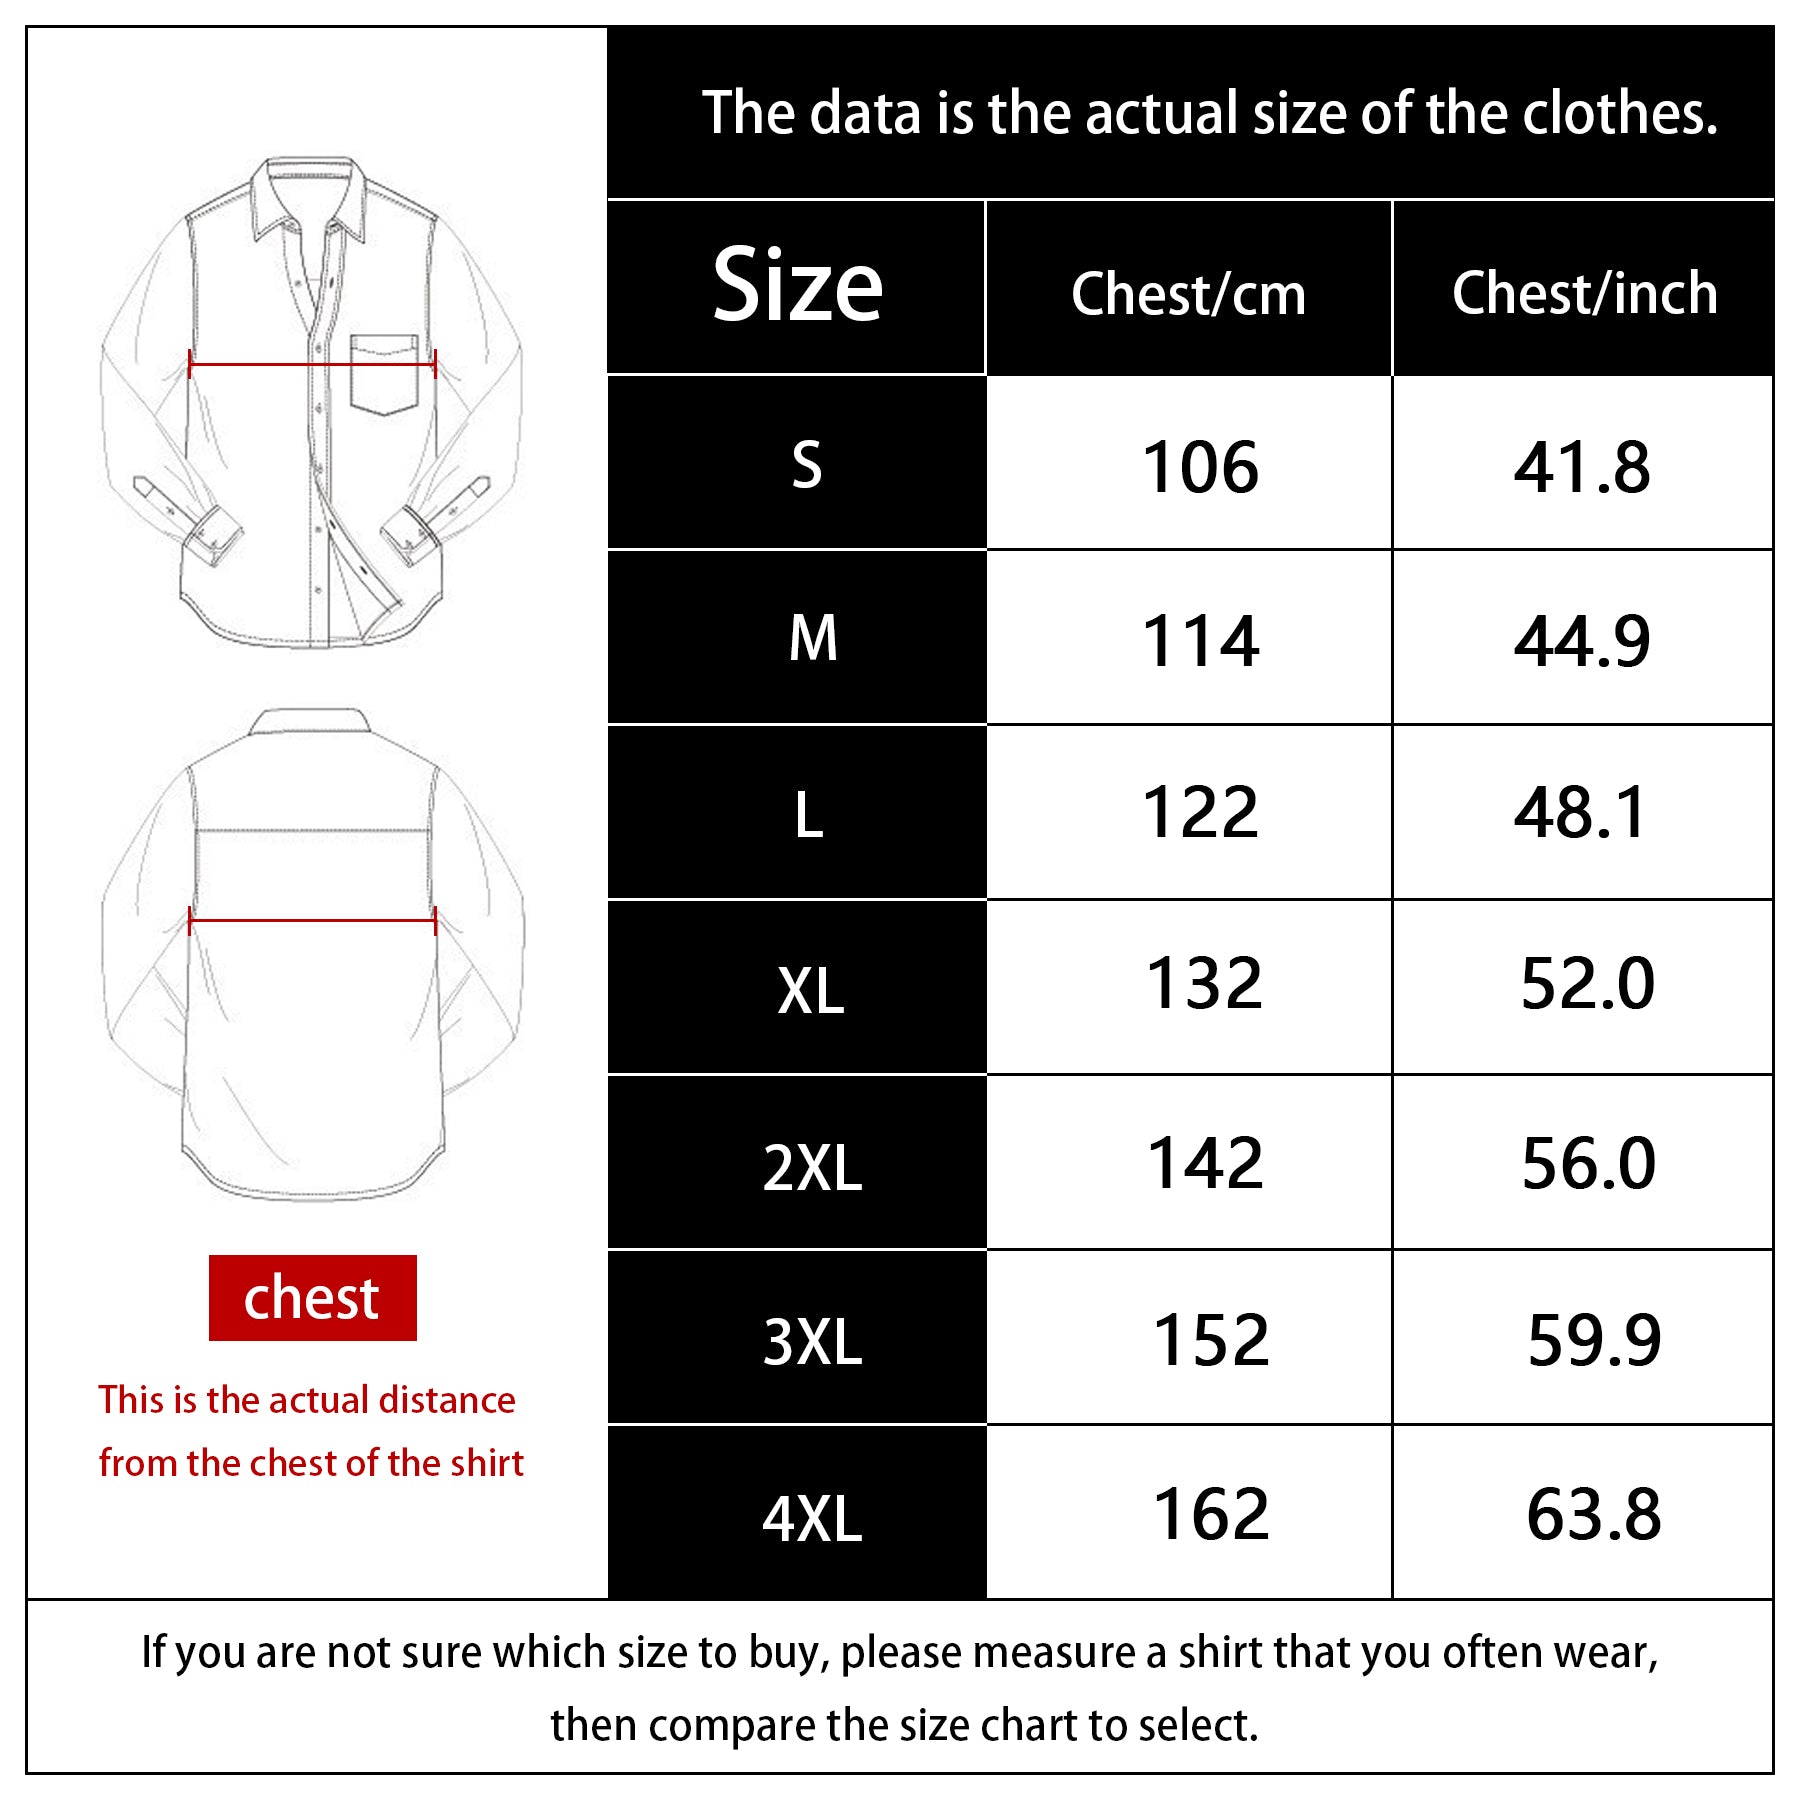 Men's casual short-sleeved cotton shirt #0021